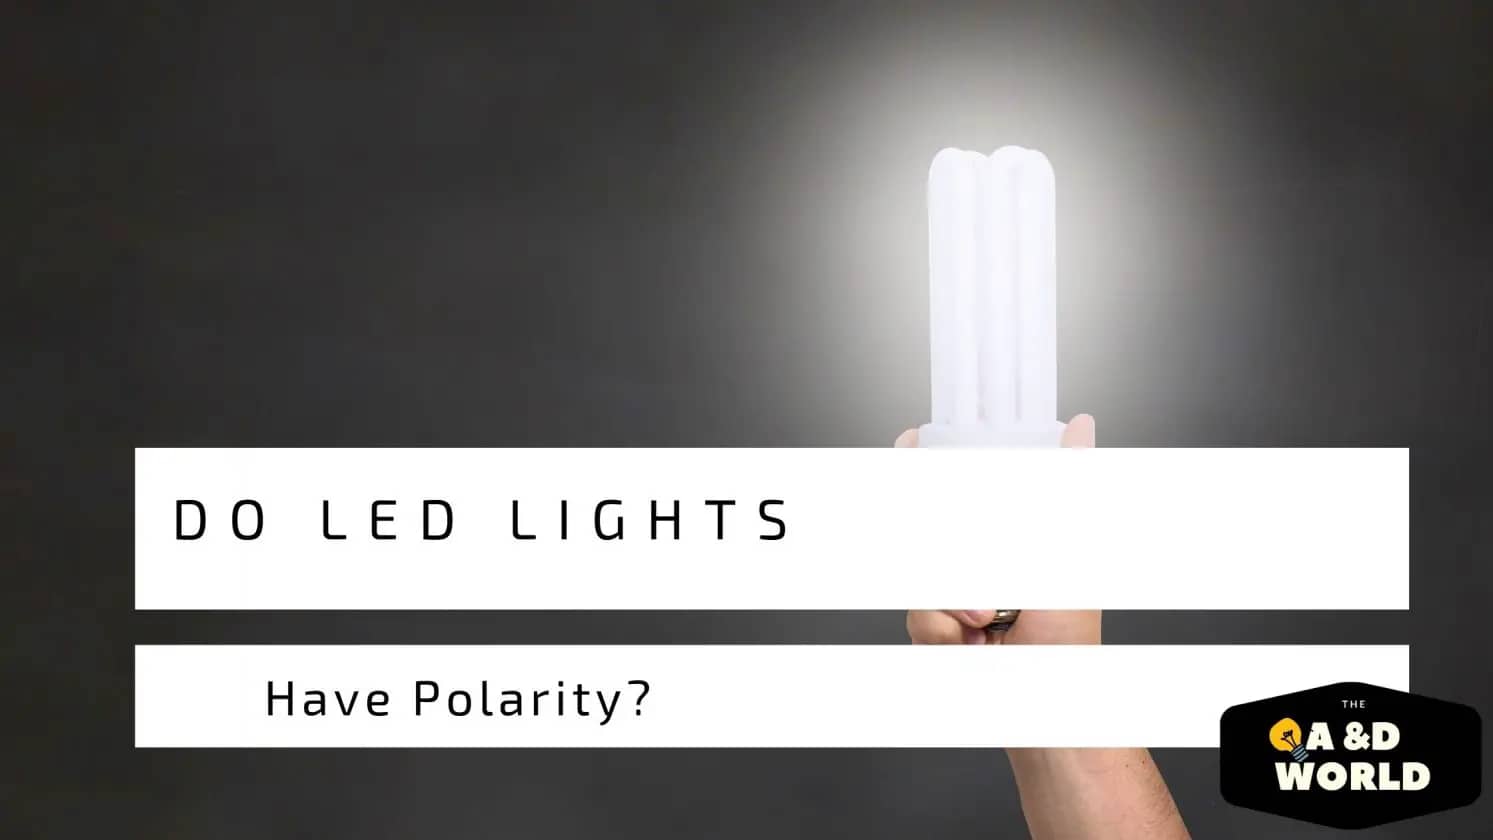 Do LED Lights Have Polarity?